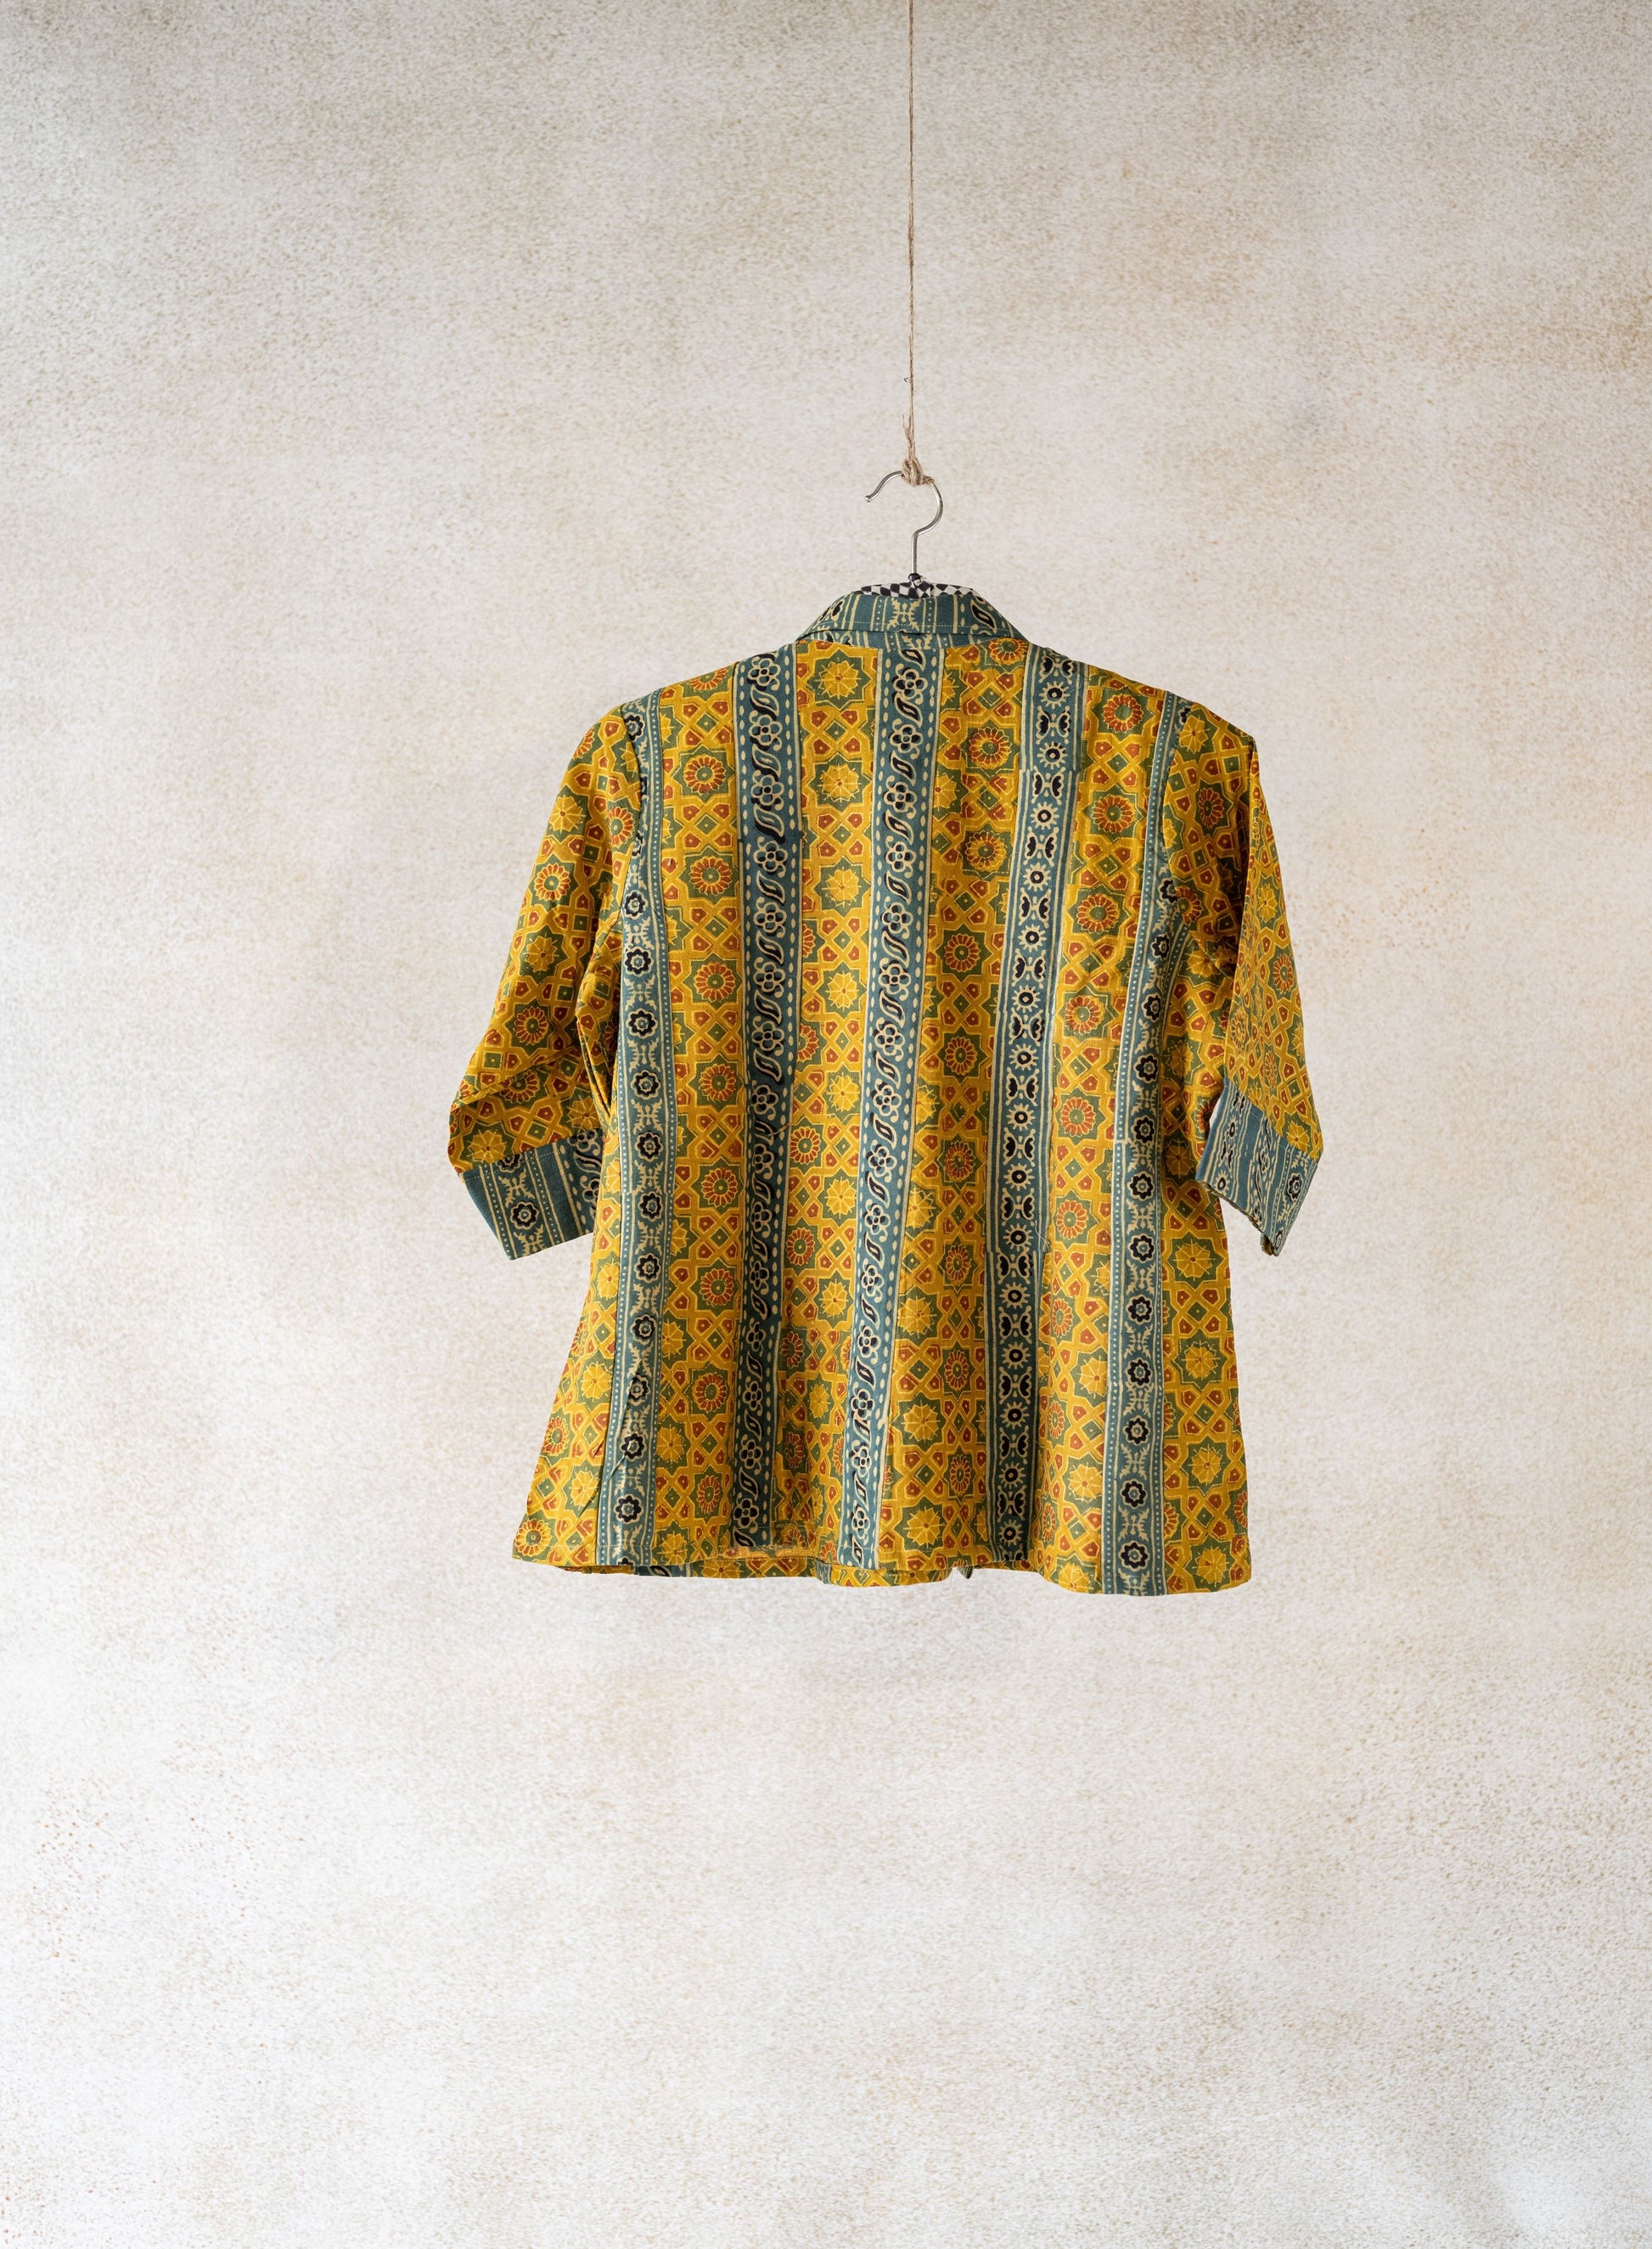 Turmeric yellow ajrakh shirt, Handmade ajrakh cotton shirt